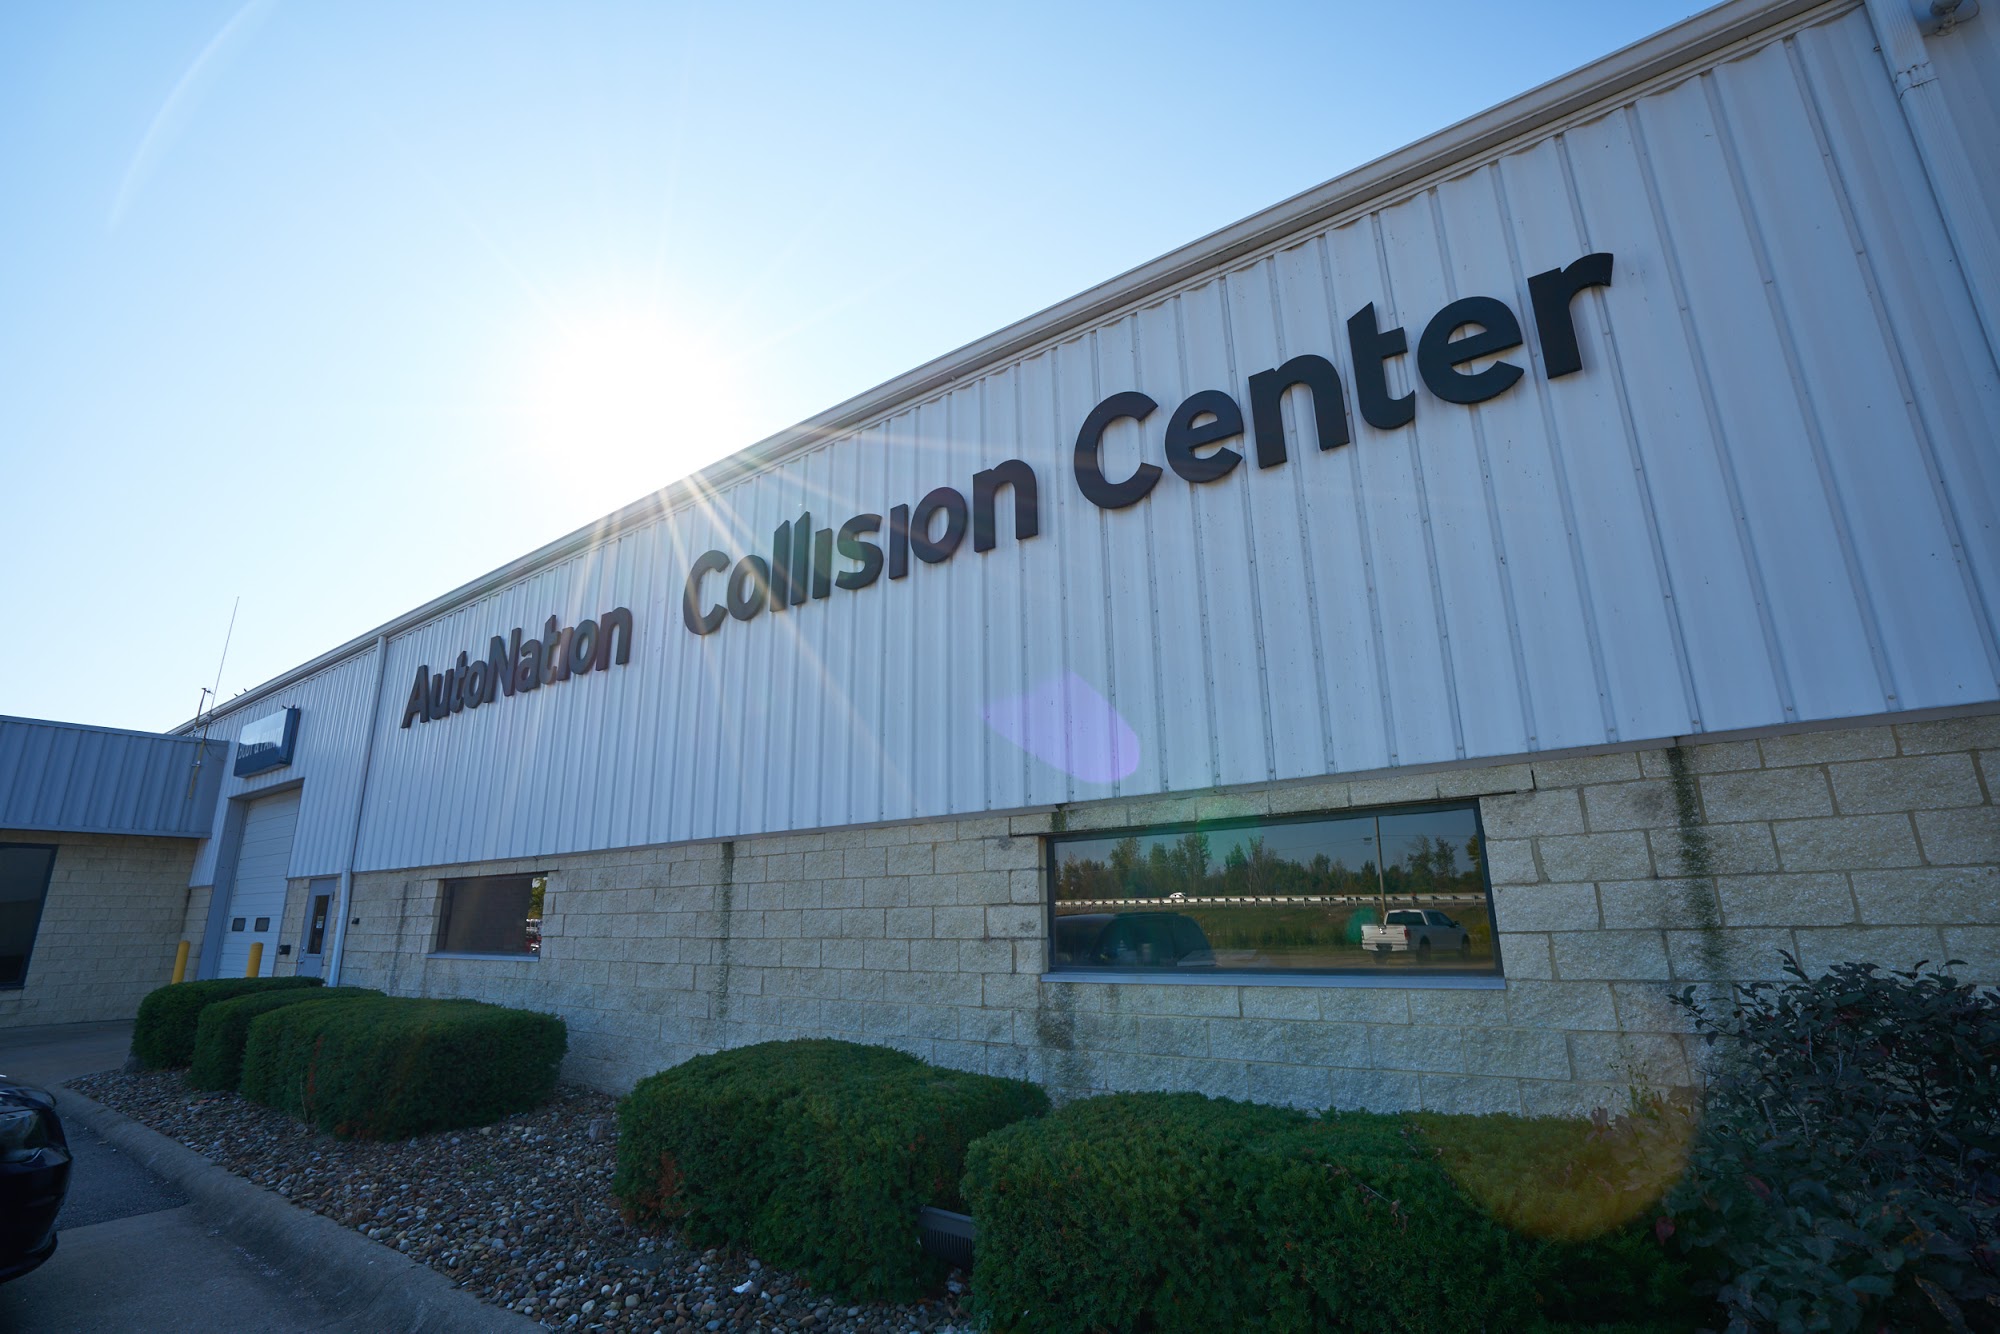 AutoNation Collision Center Amherst